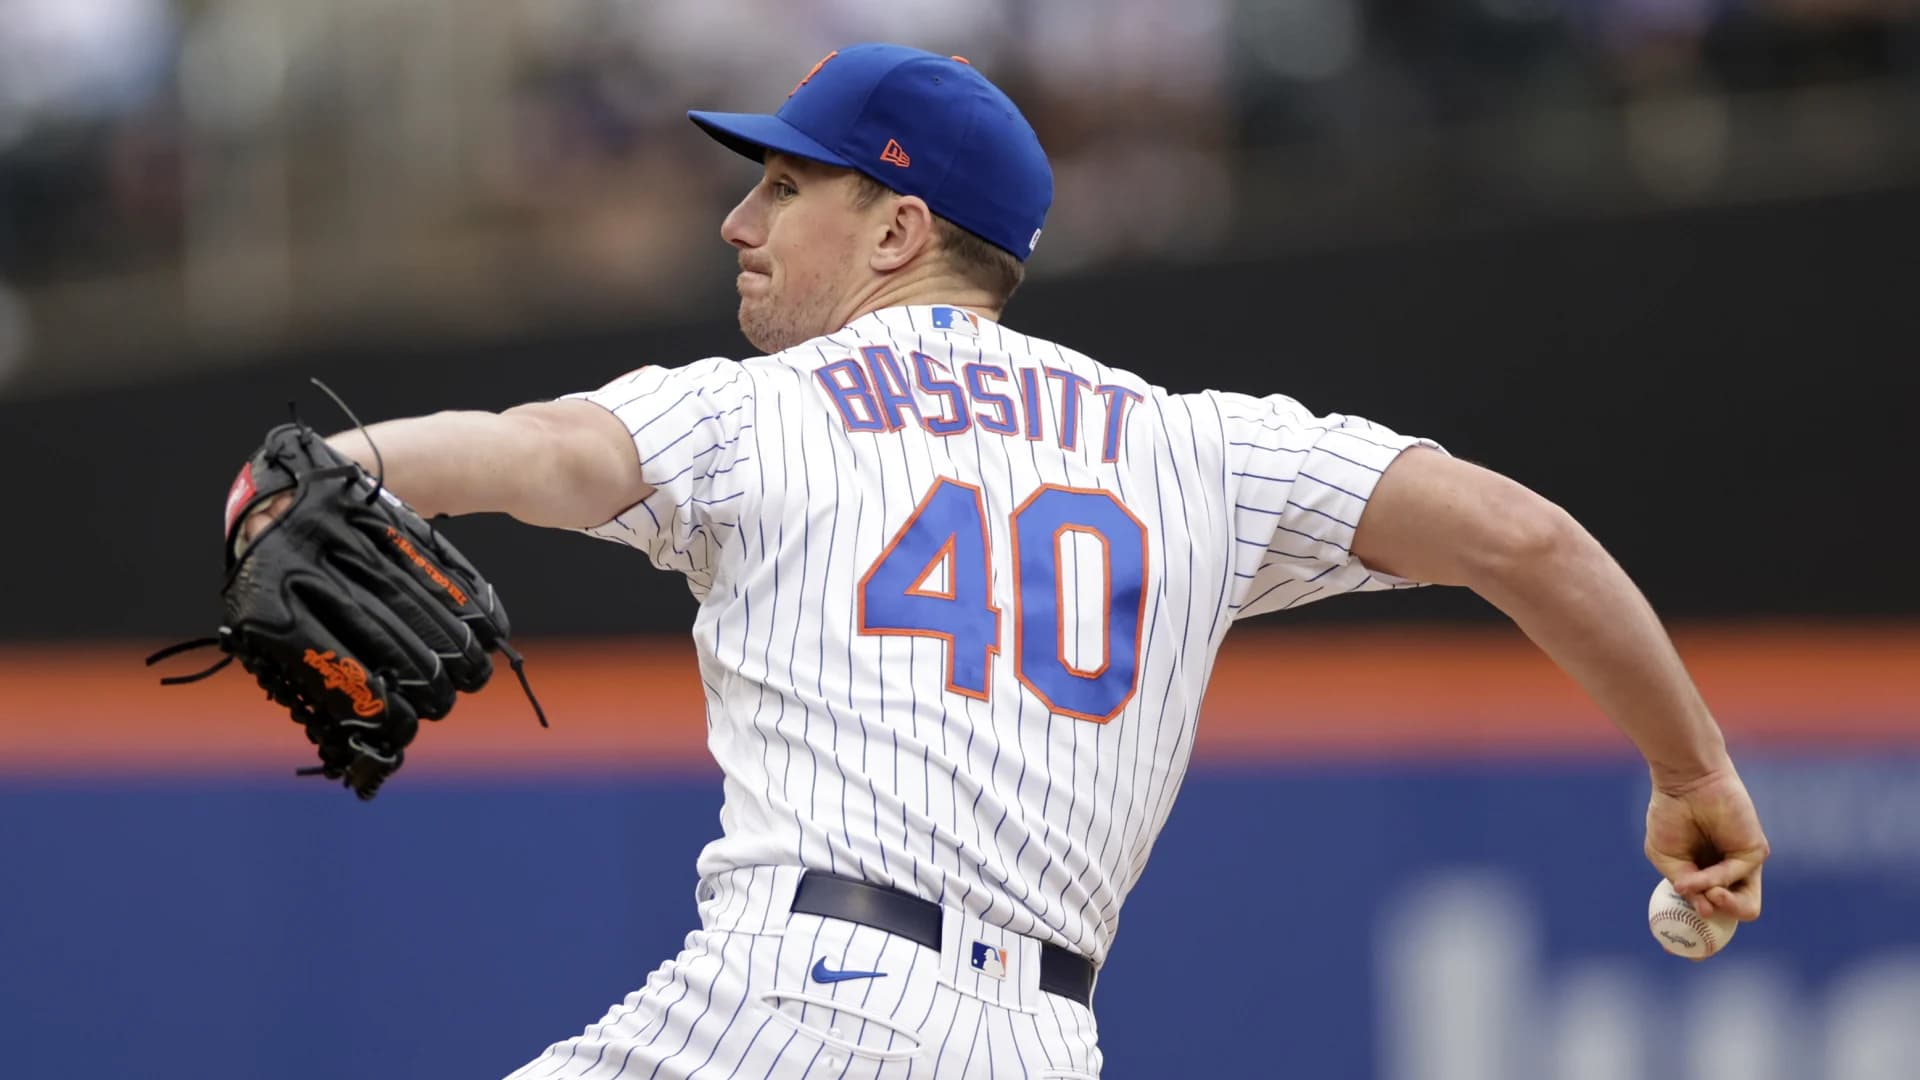 Bassitt has $8.65M salary, Mets deal includes $19M option